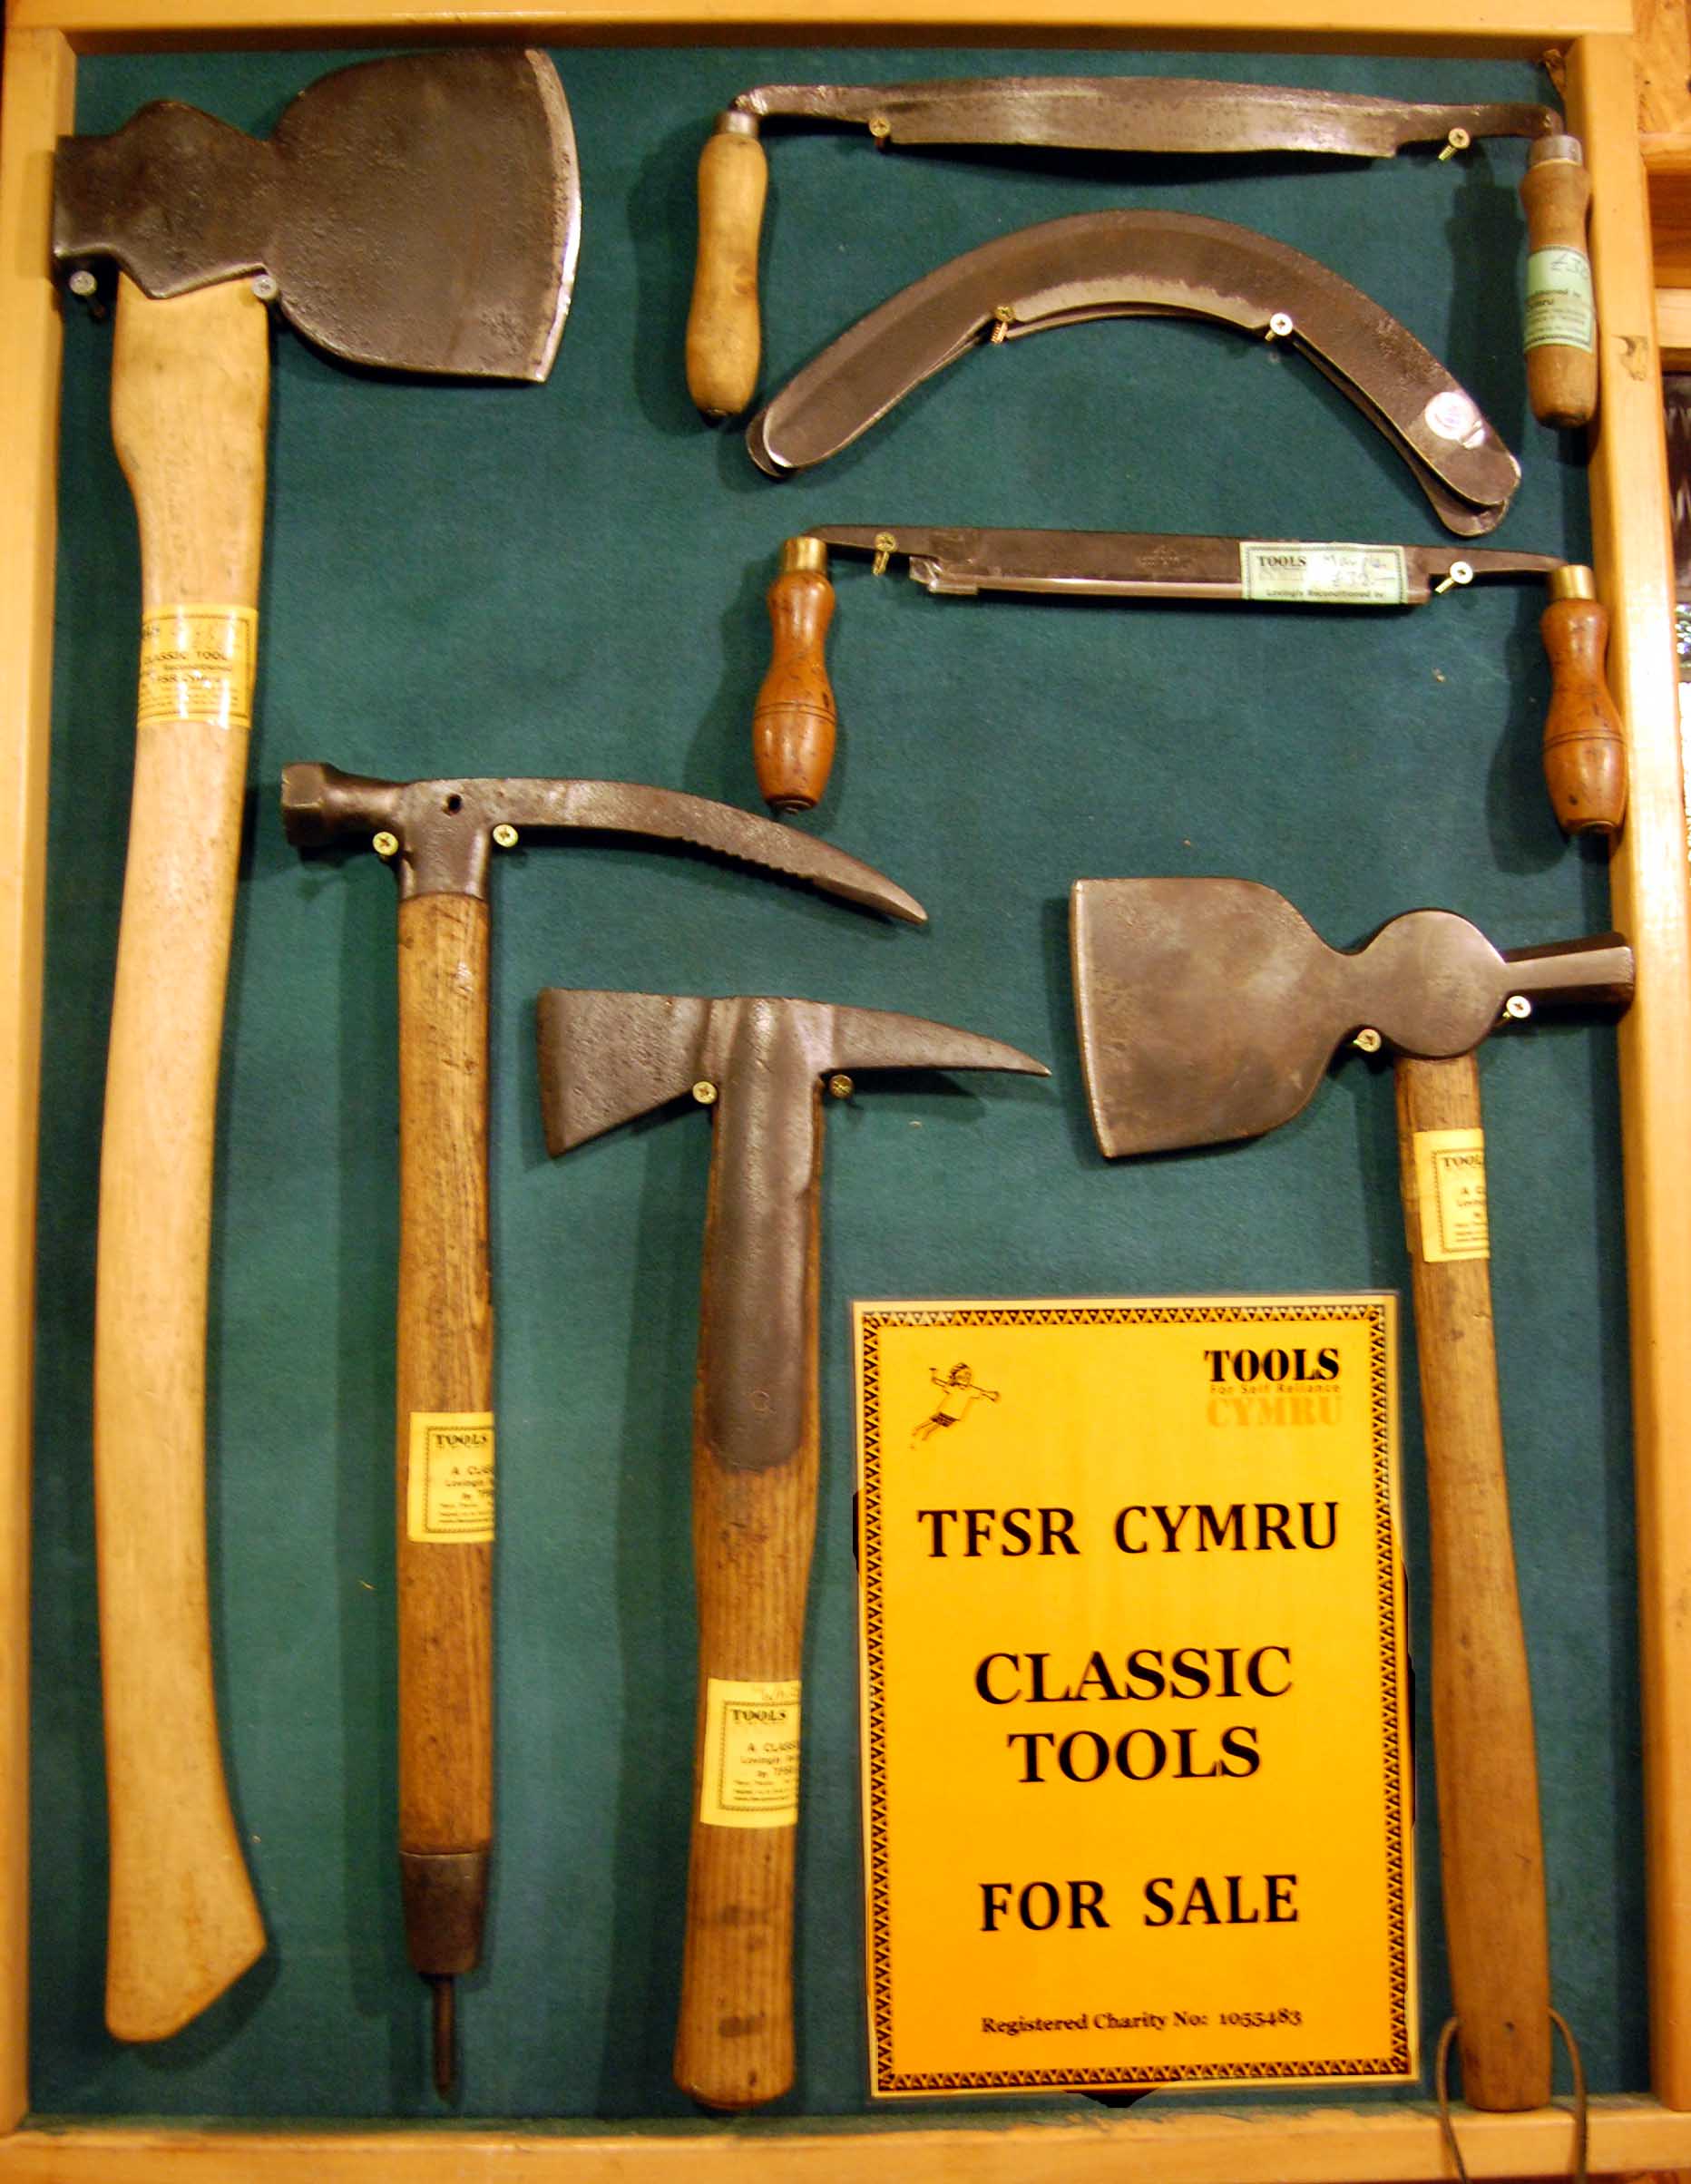 Classic tools